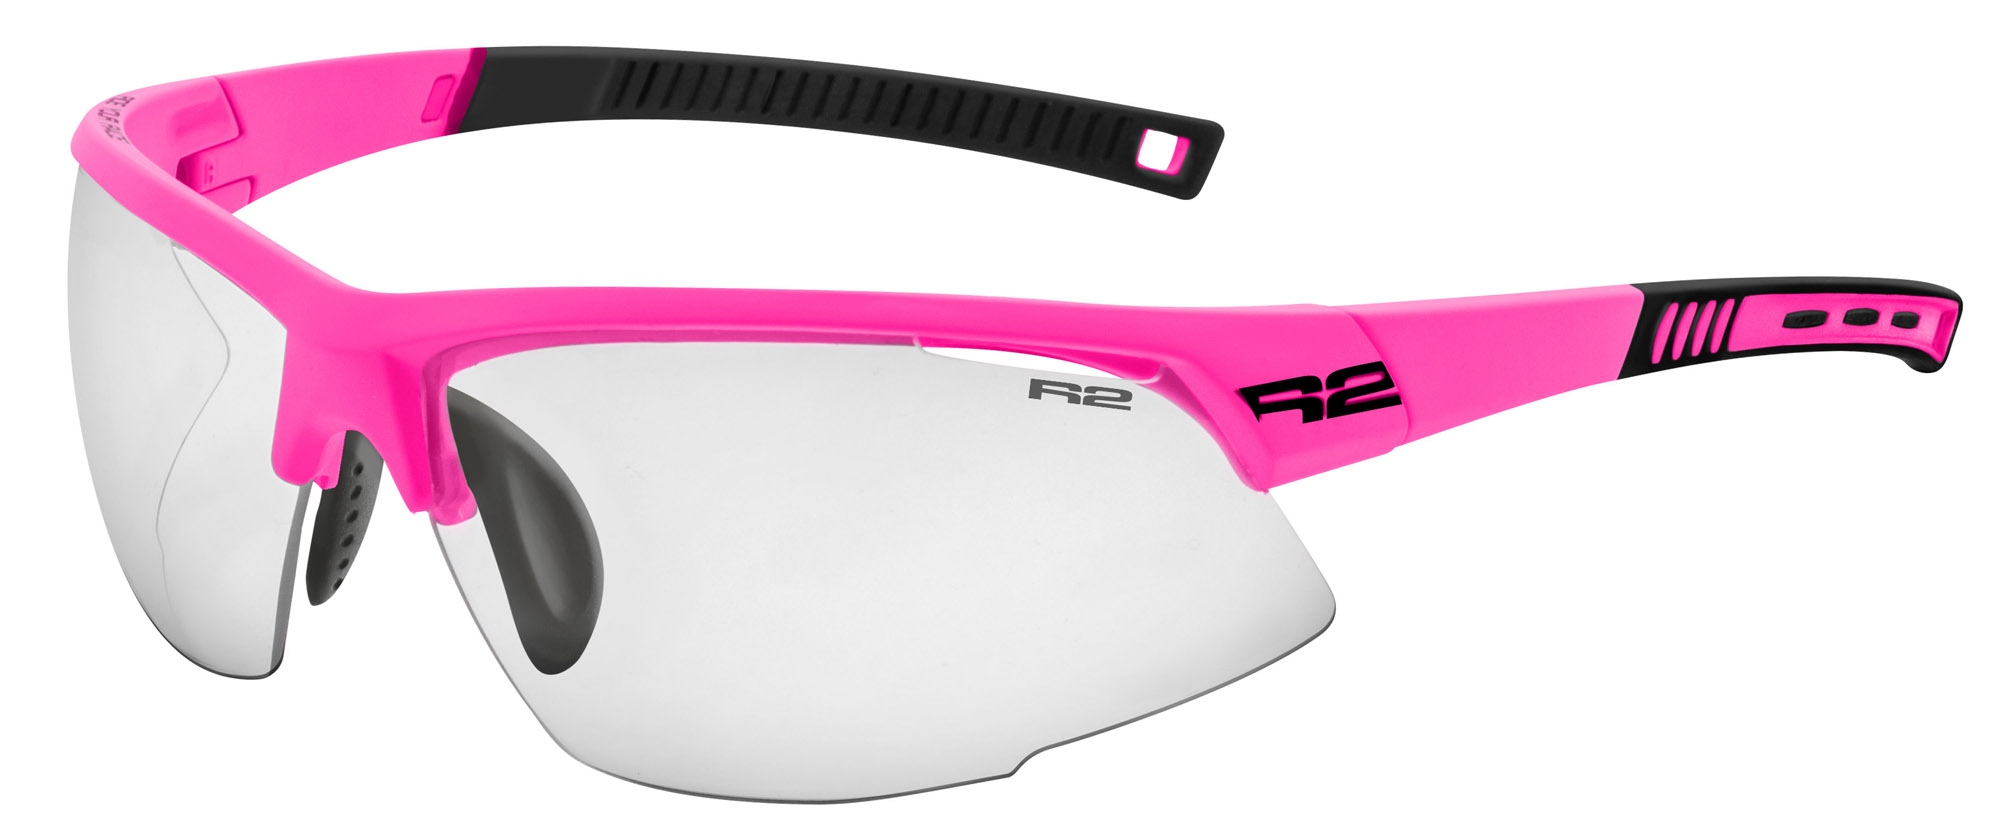 Photochromatic sunglasses  R2 RACER AT063P/PH standard